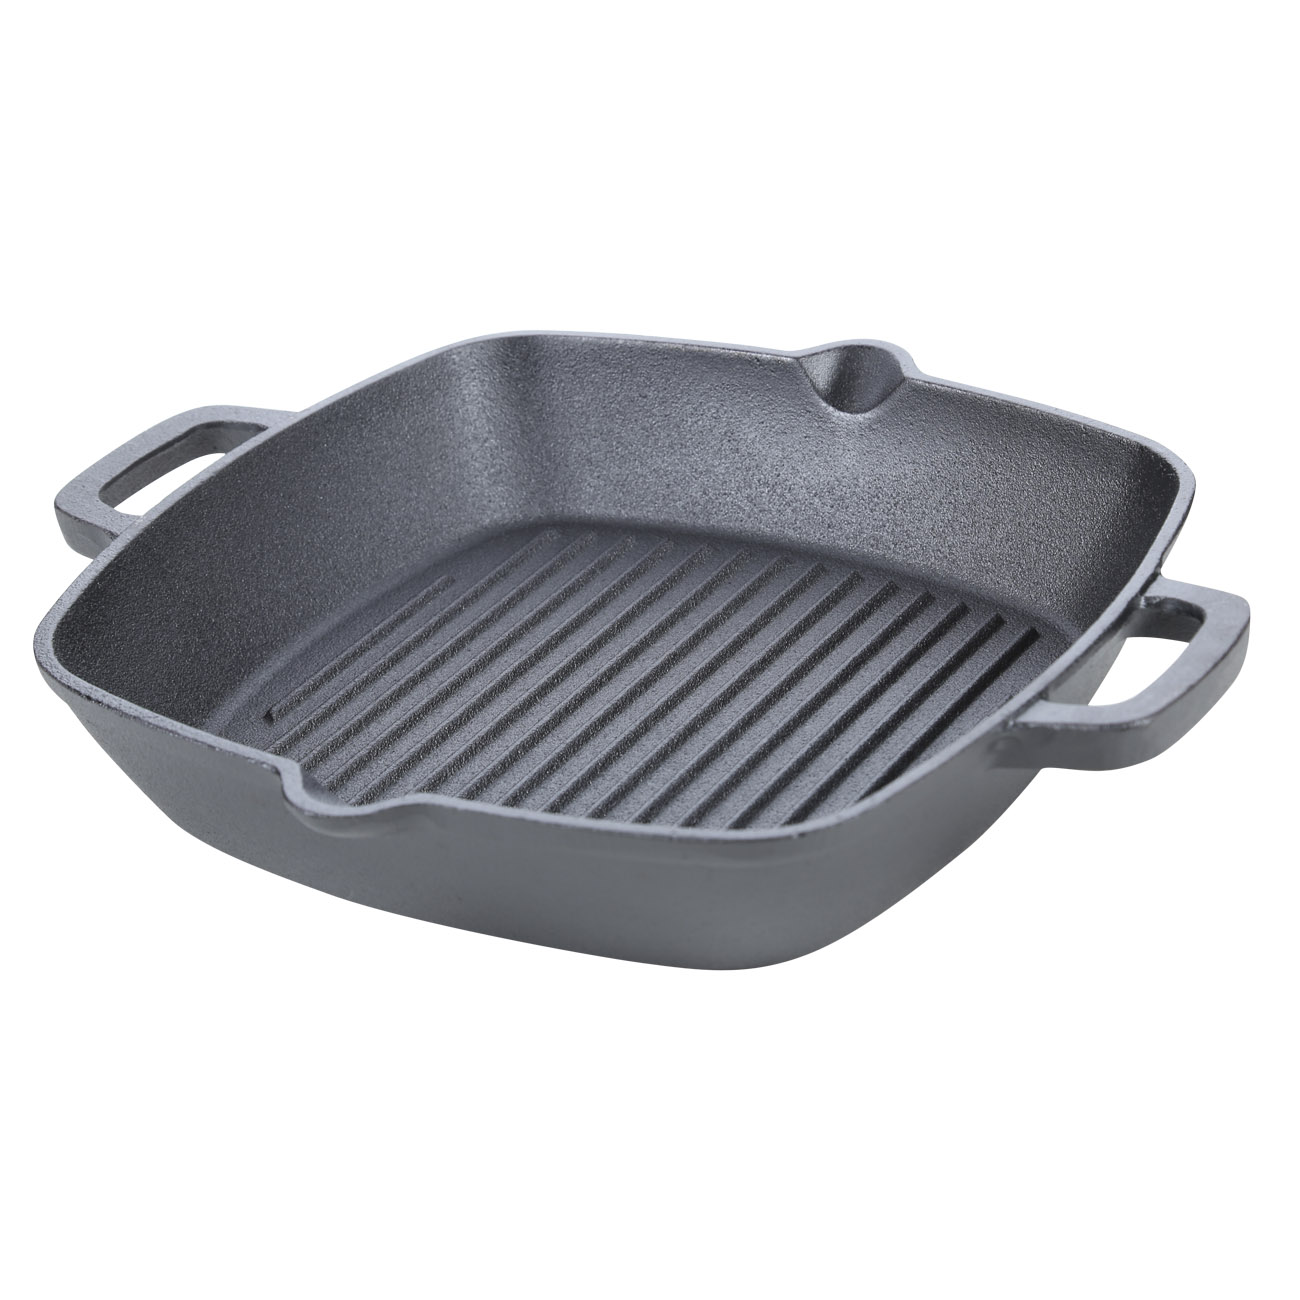 Grill pan, 26 cm, with handles, cast iron, square, black, Authentic изображение № 2